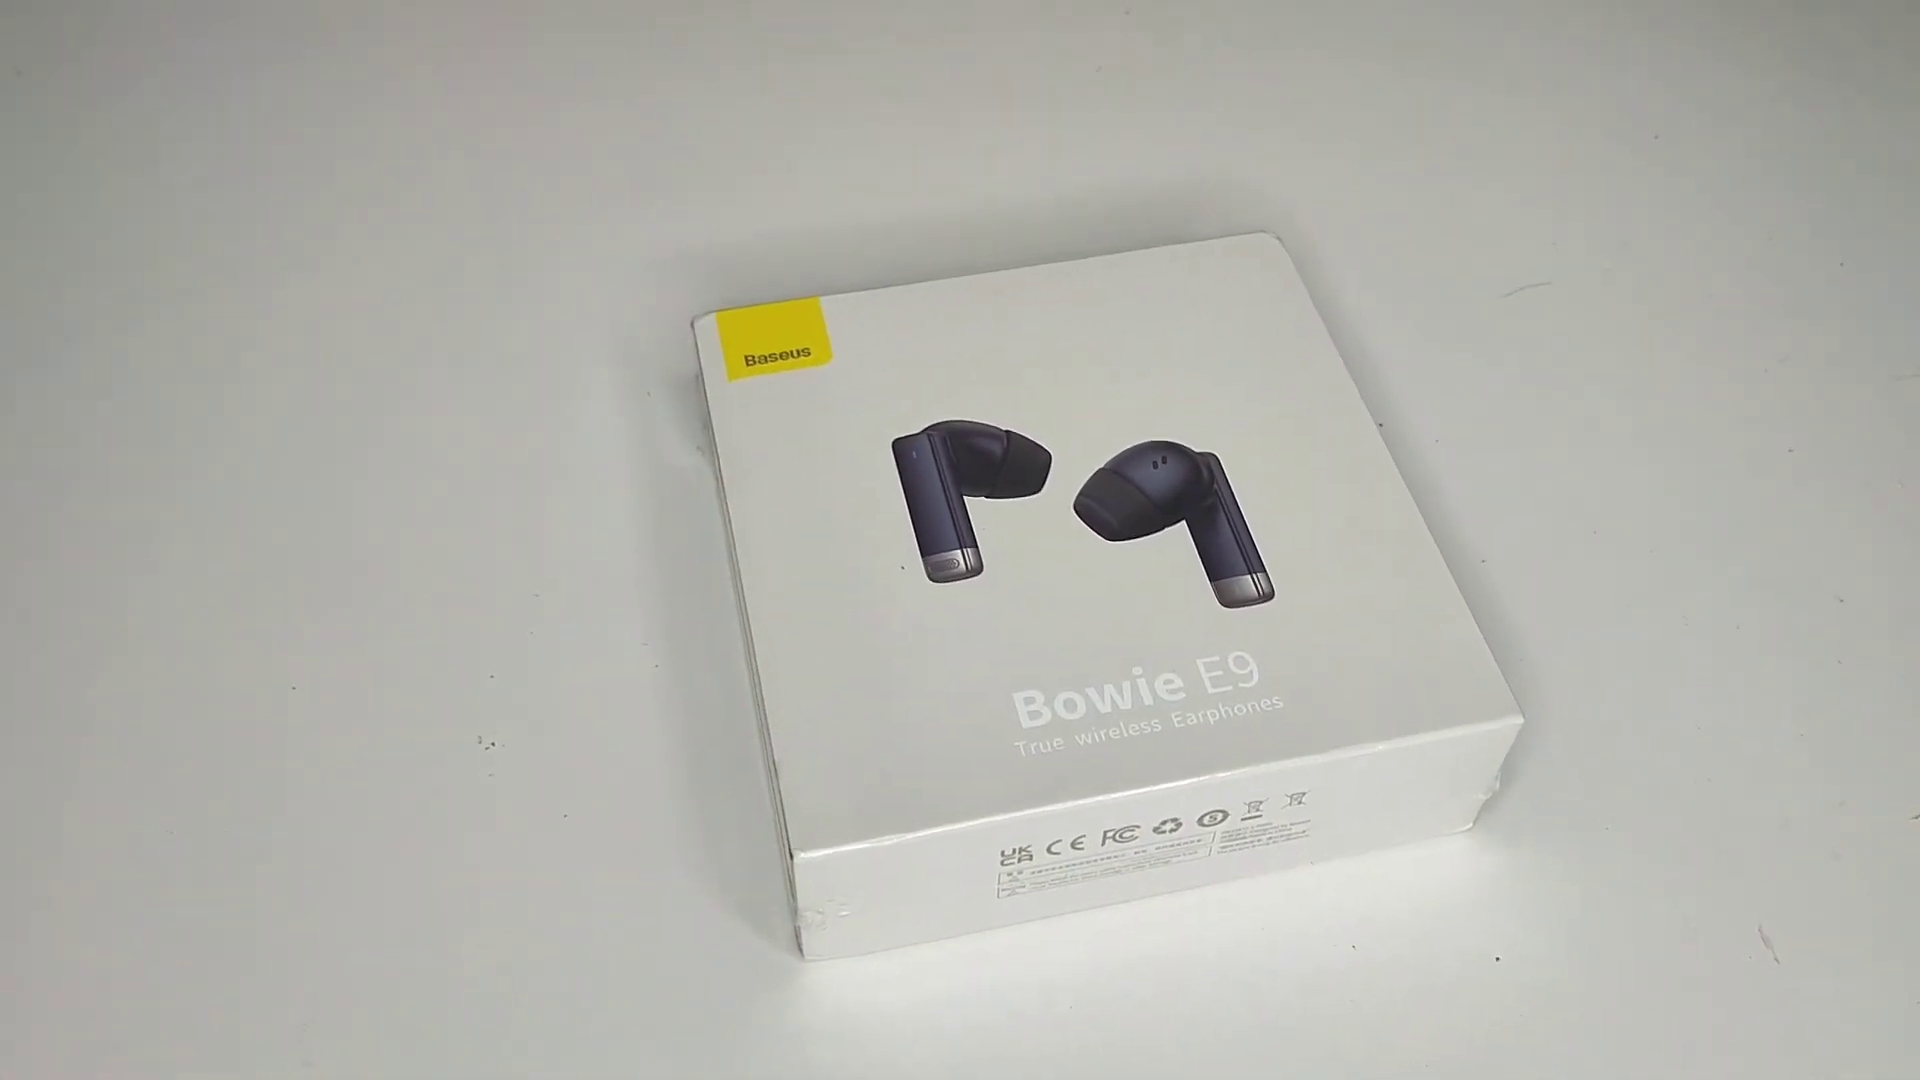 Baseus Bowie E9 Earbuds Review